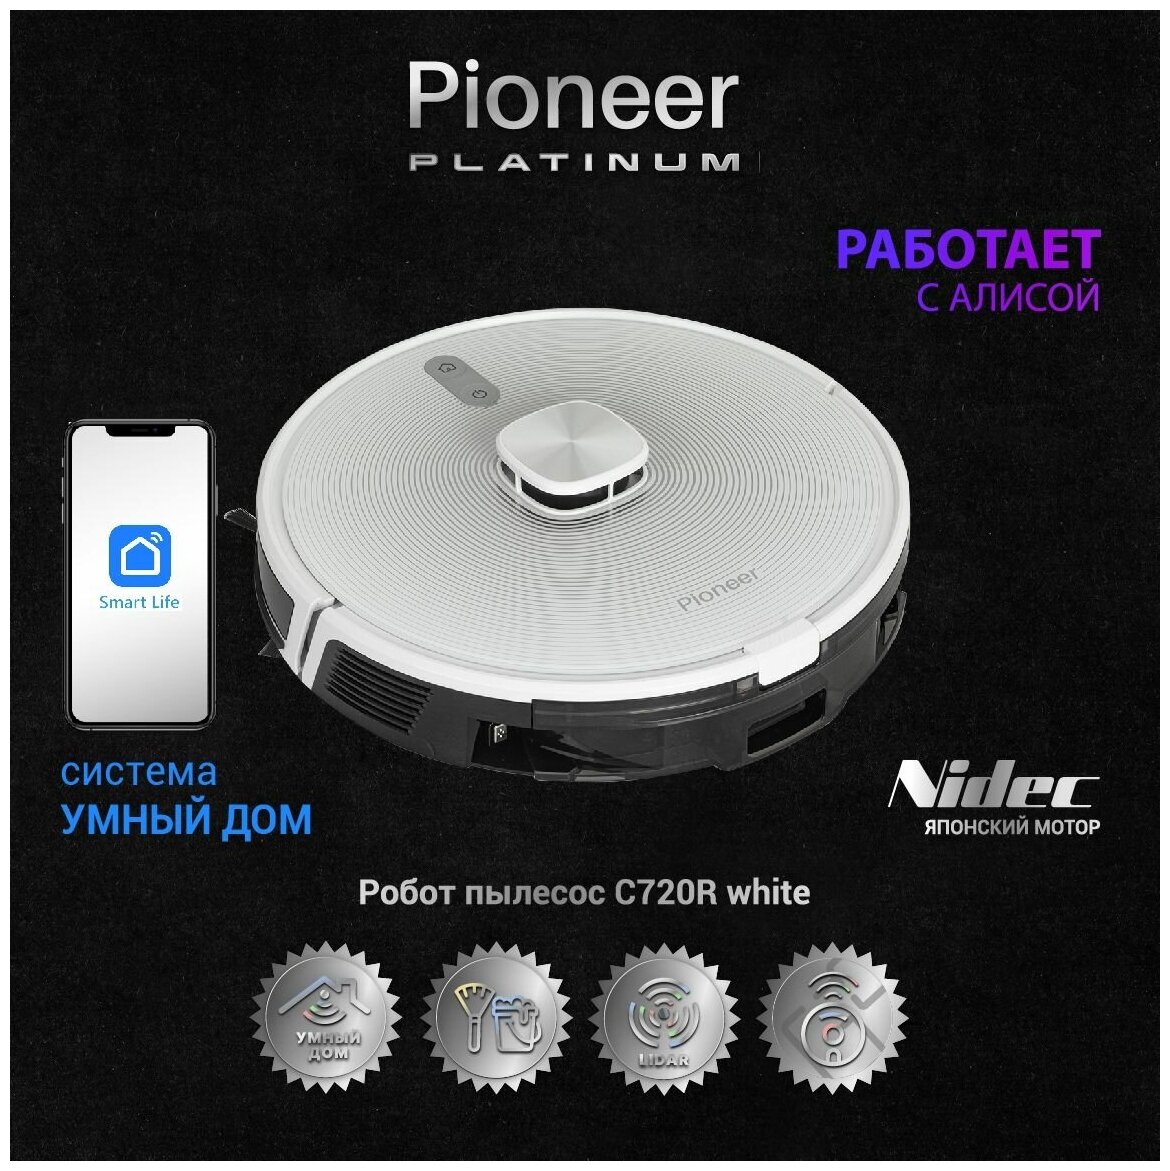 Робот-пылесос PIONEER HOME PIONEER VC720R, white - фотография № 3